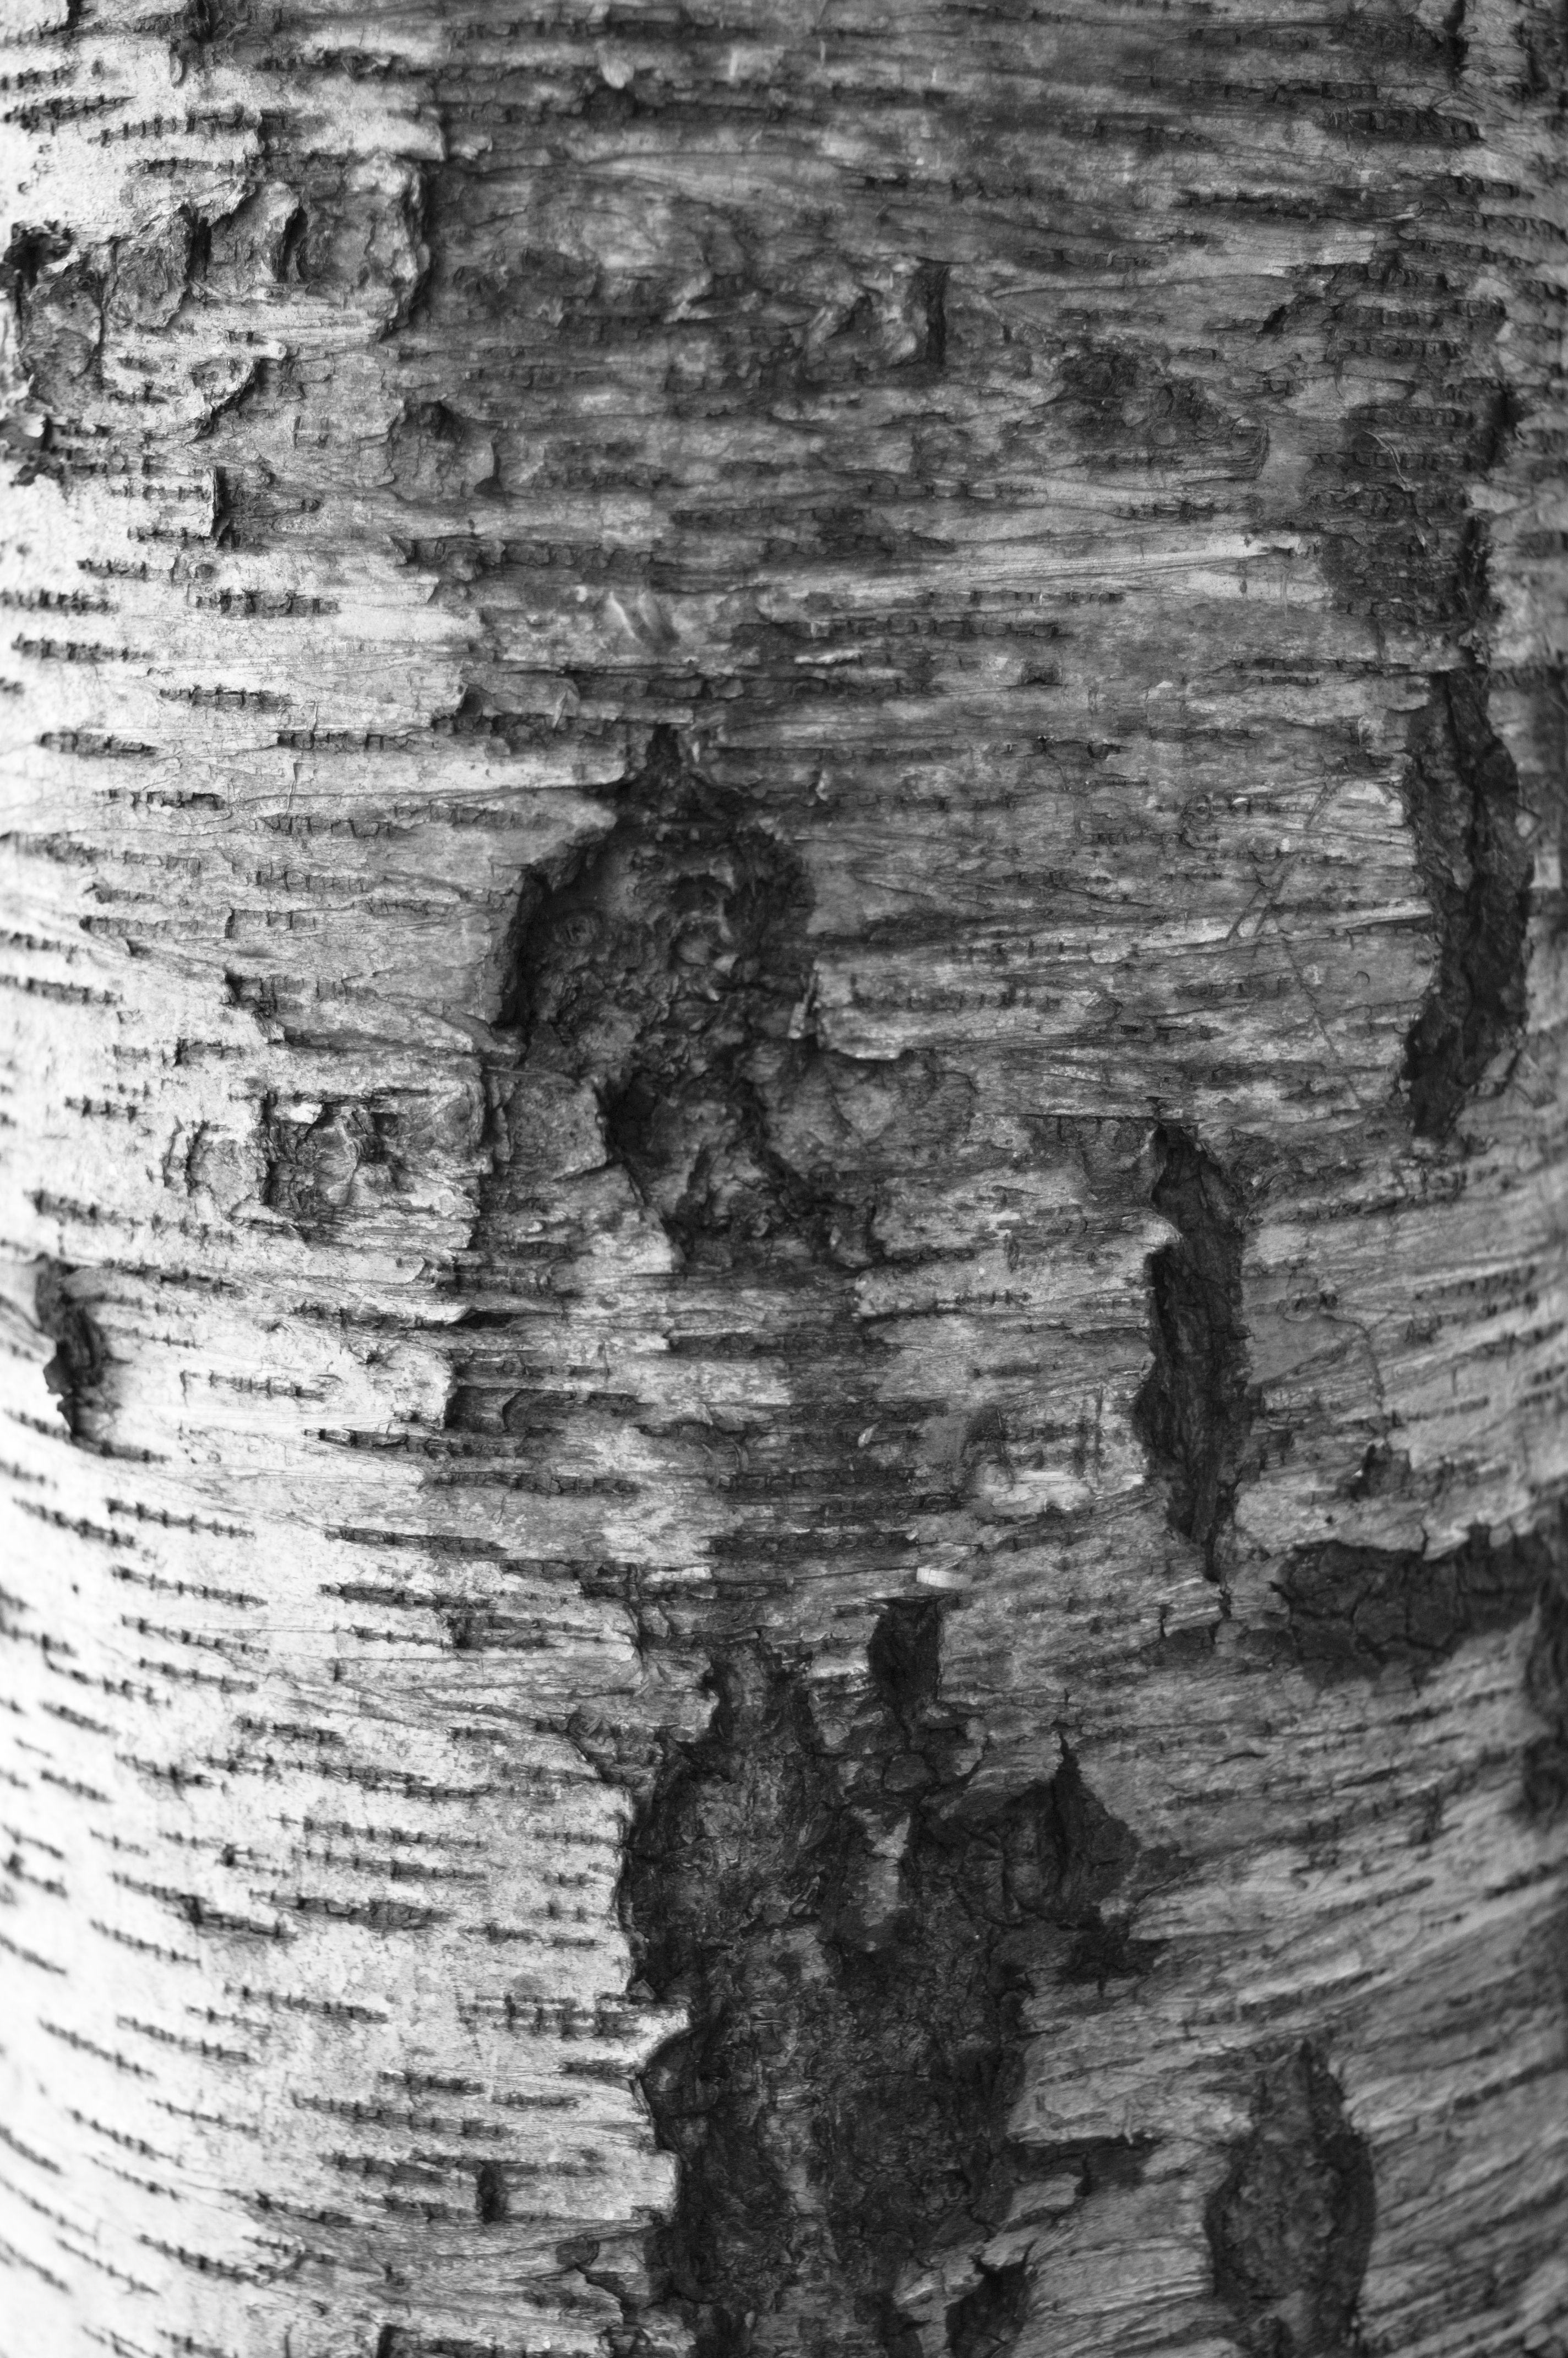 Birch Tree Wood Bark Texture by Enchantedgal-Stock on DeviantArt